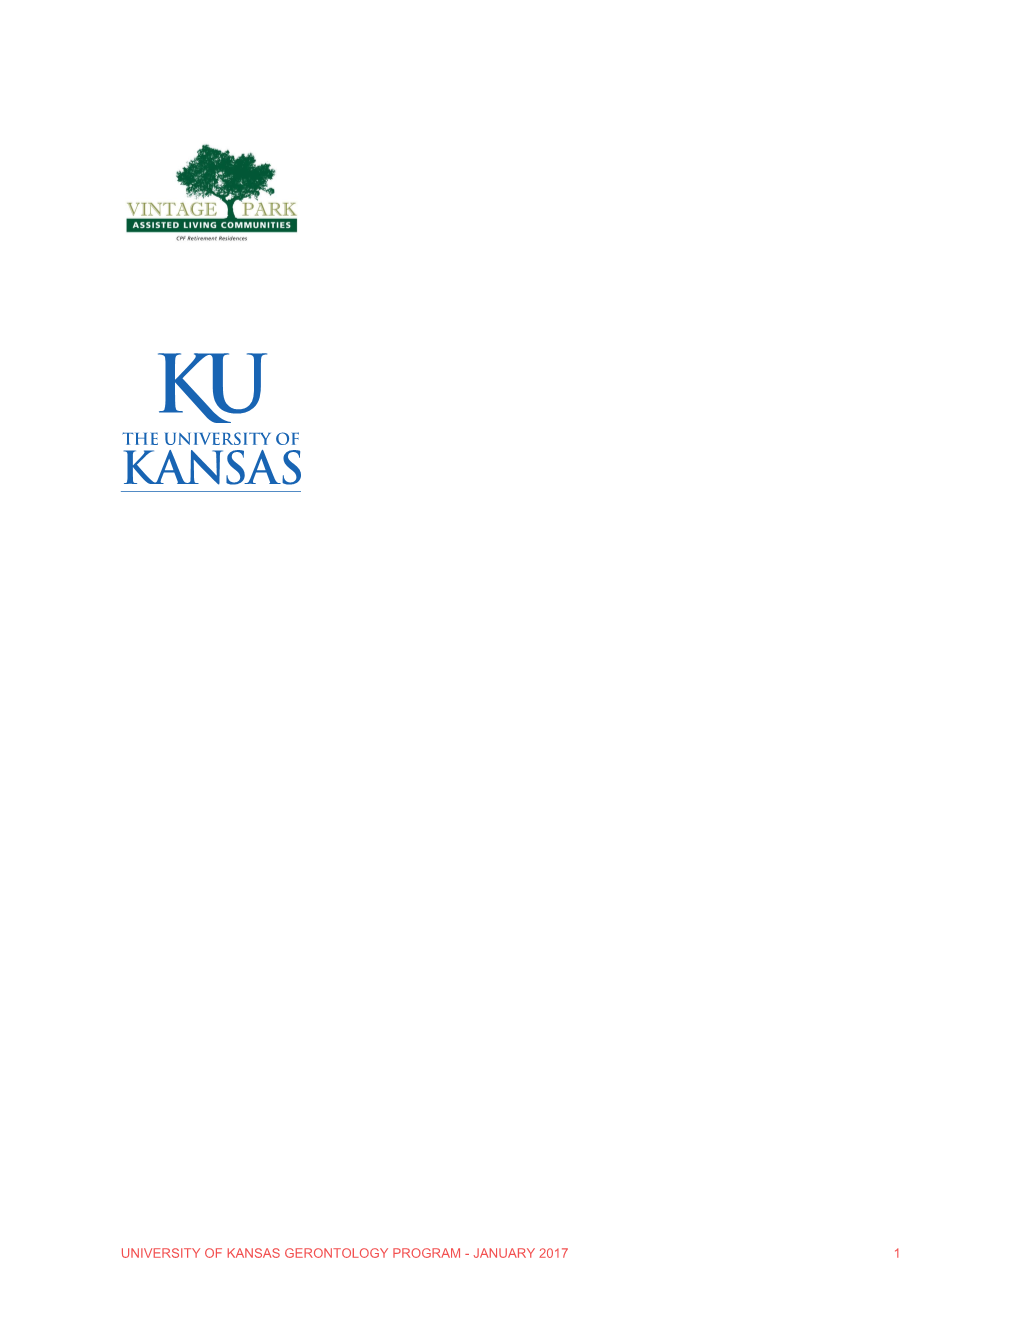 University of Kansas Gerontology Program